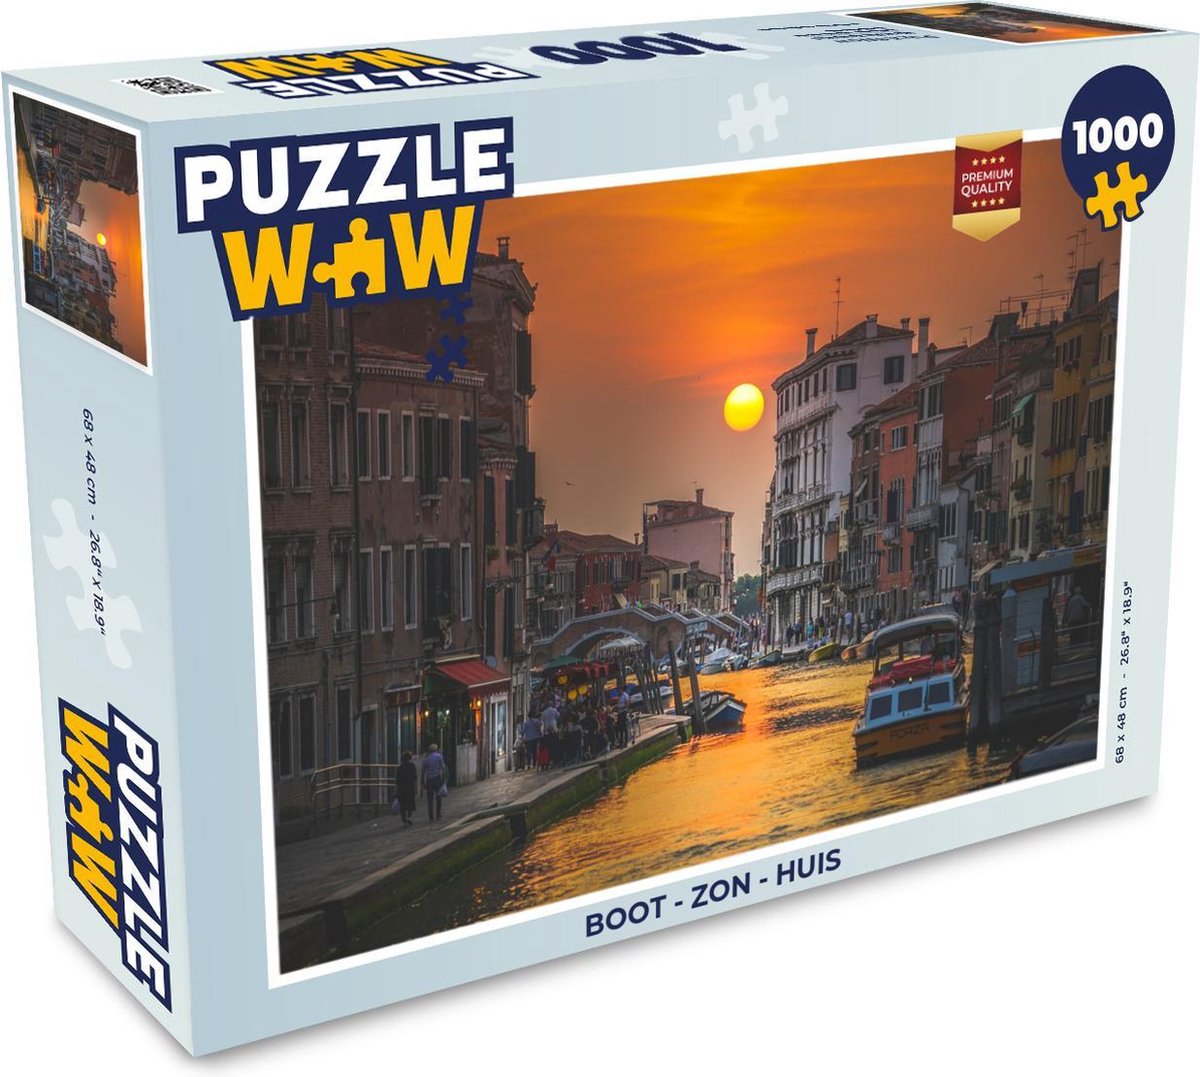 Afbeelding van product PuzzleWow  Puzzel Boot - Zon - Huis - Legpuzzel - Puzzel 1000 stukjes volwassenen - Sinterklaas Cadeau - Kerstcadeau